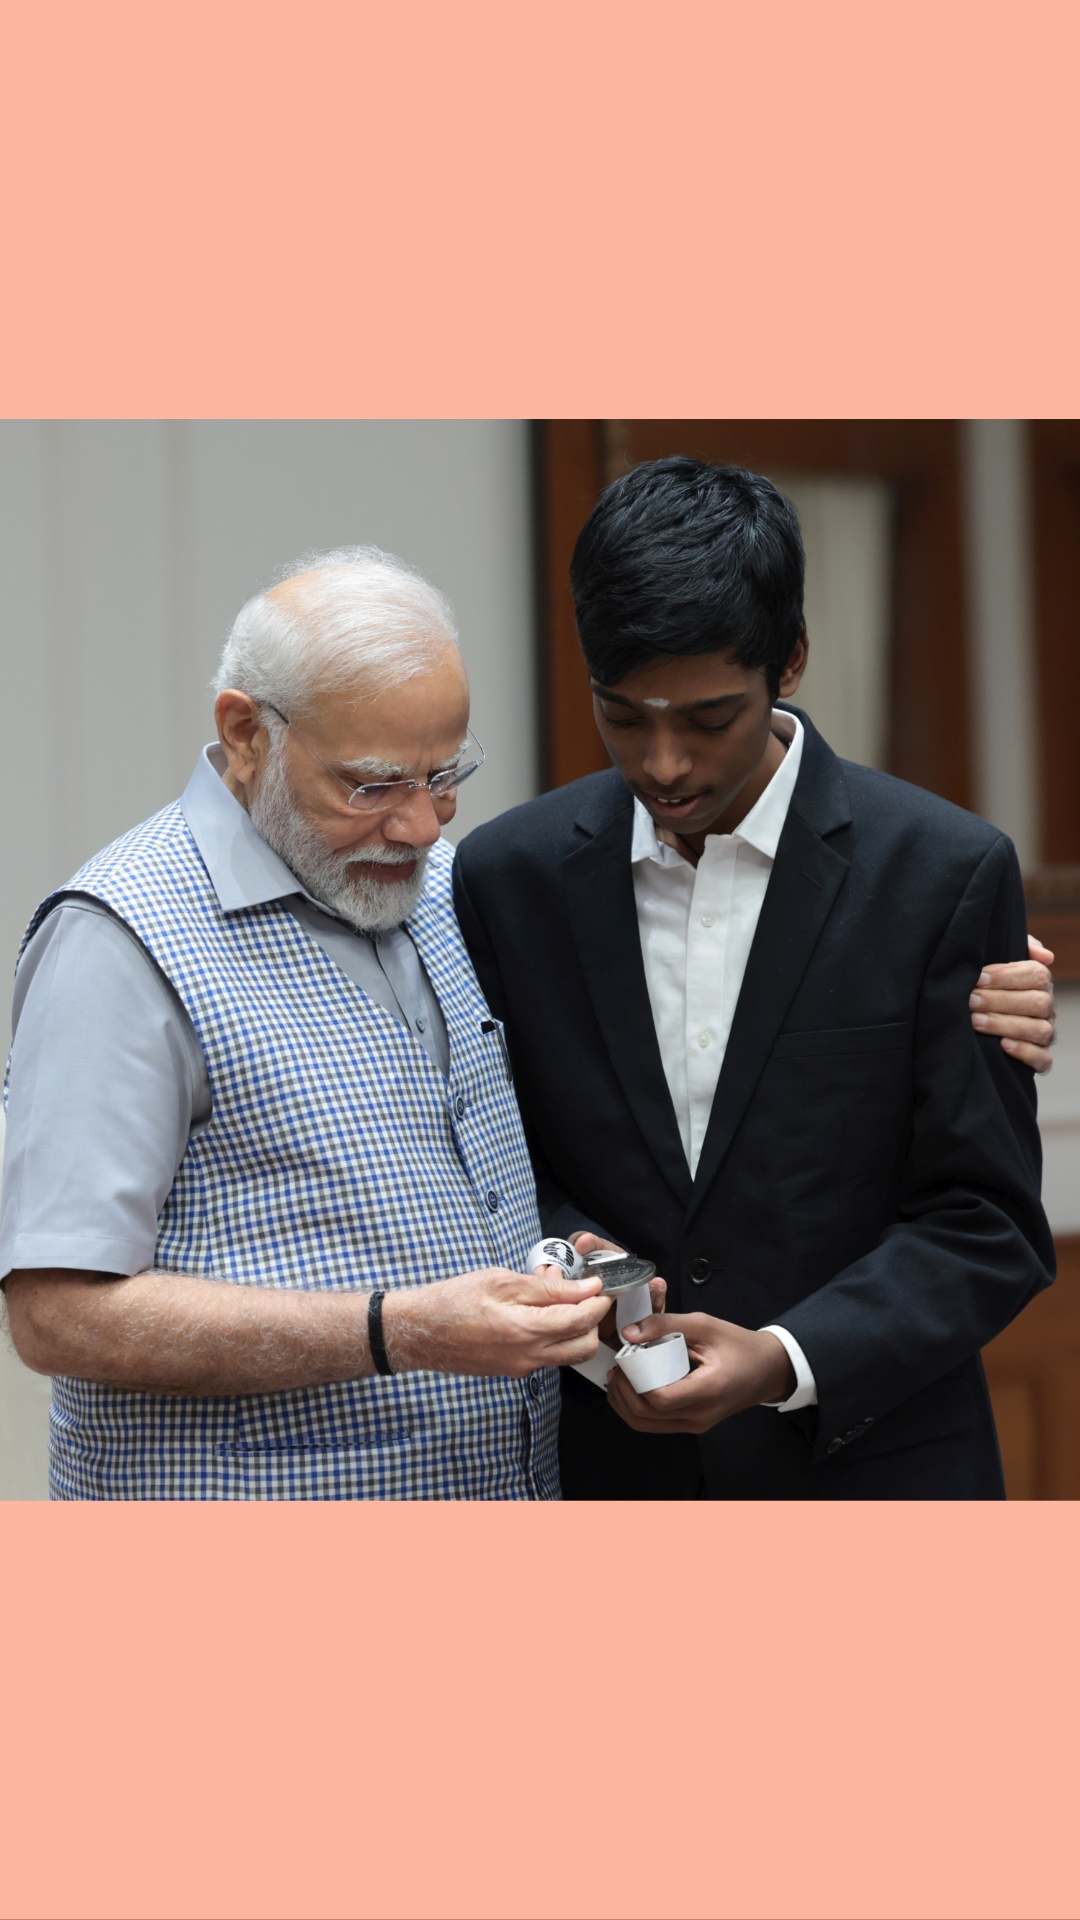 PM Modi hails Praggnanandhaa for chess World Cup runner-up finish -  Hindustan Times